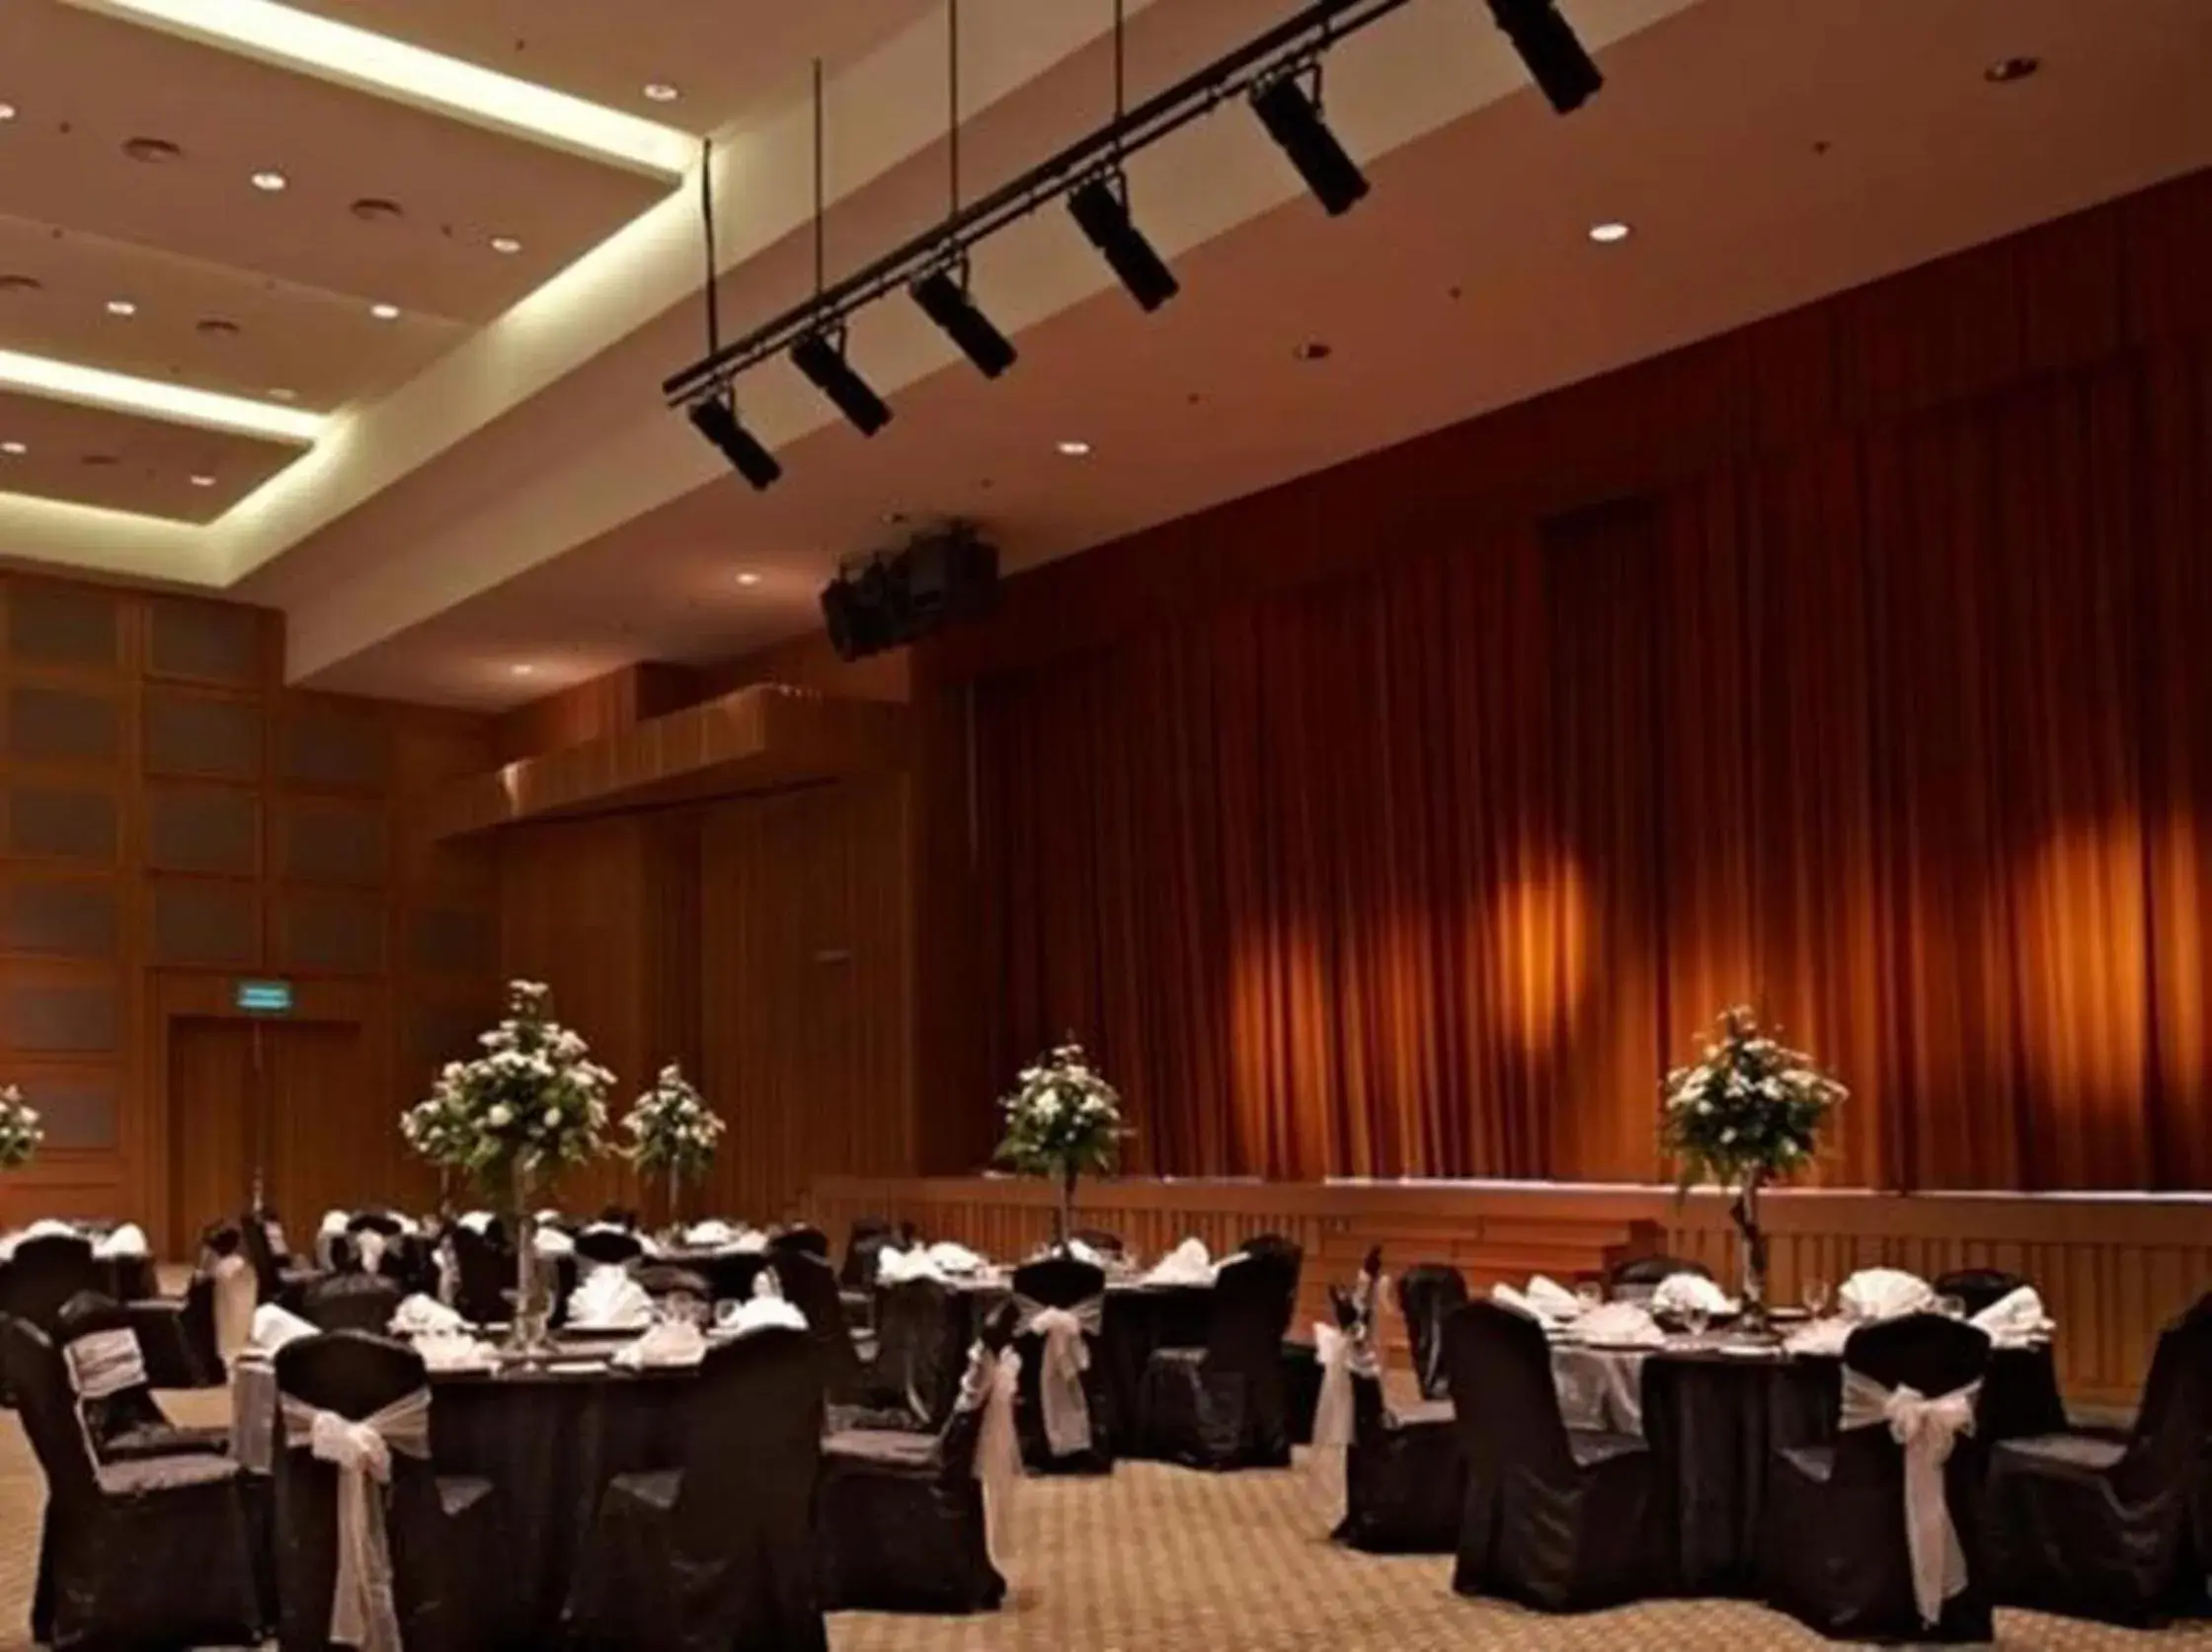 Banquet/Function facilities, Banquet Facilities in Premiera Hotel Kuala Lumpur